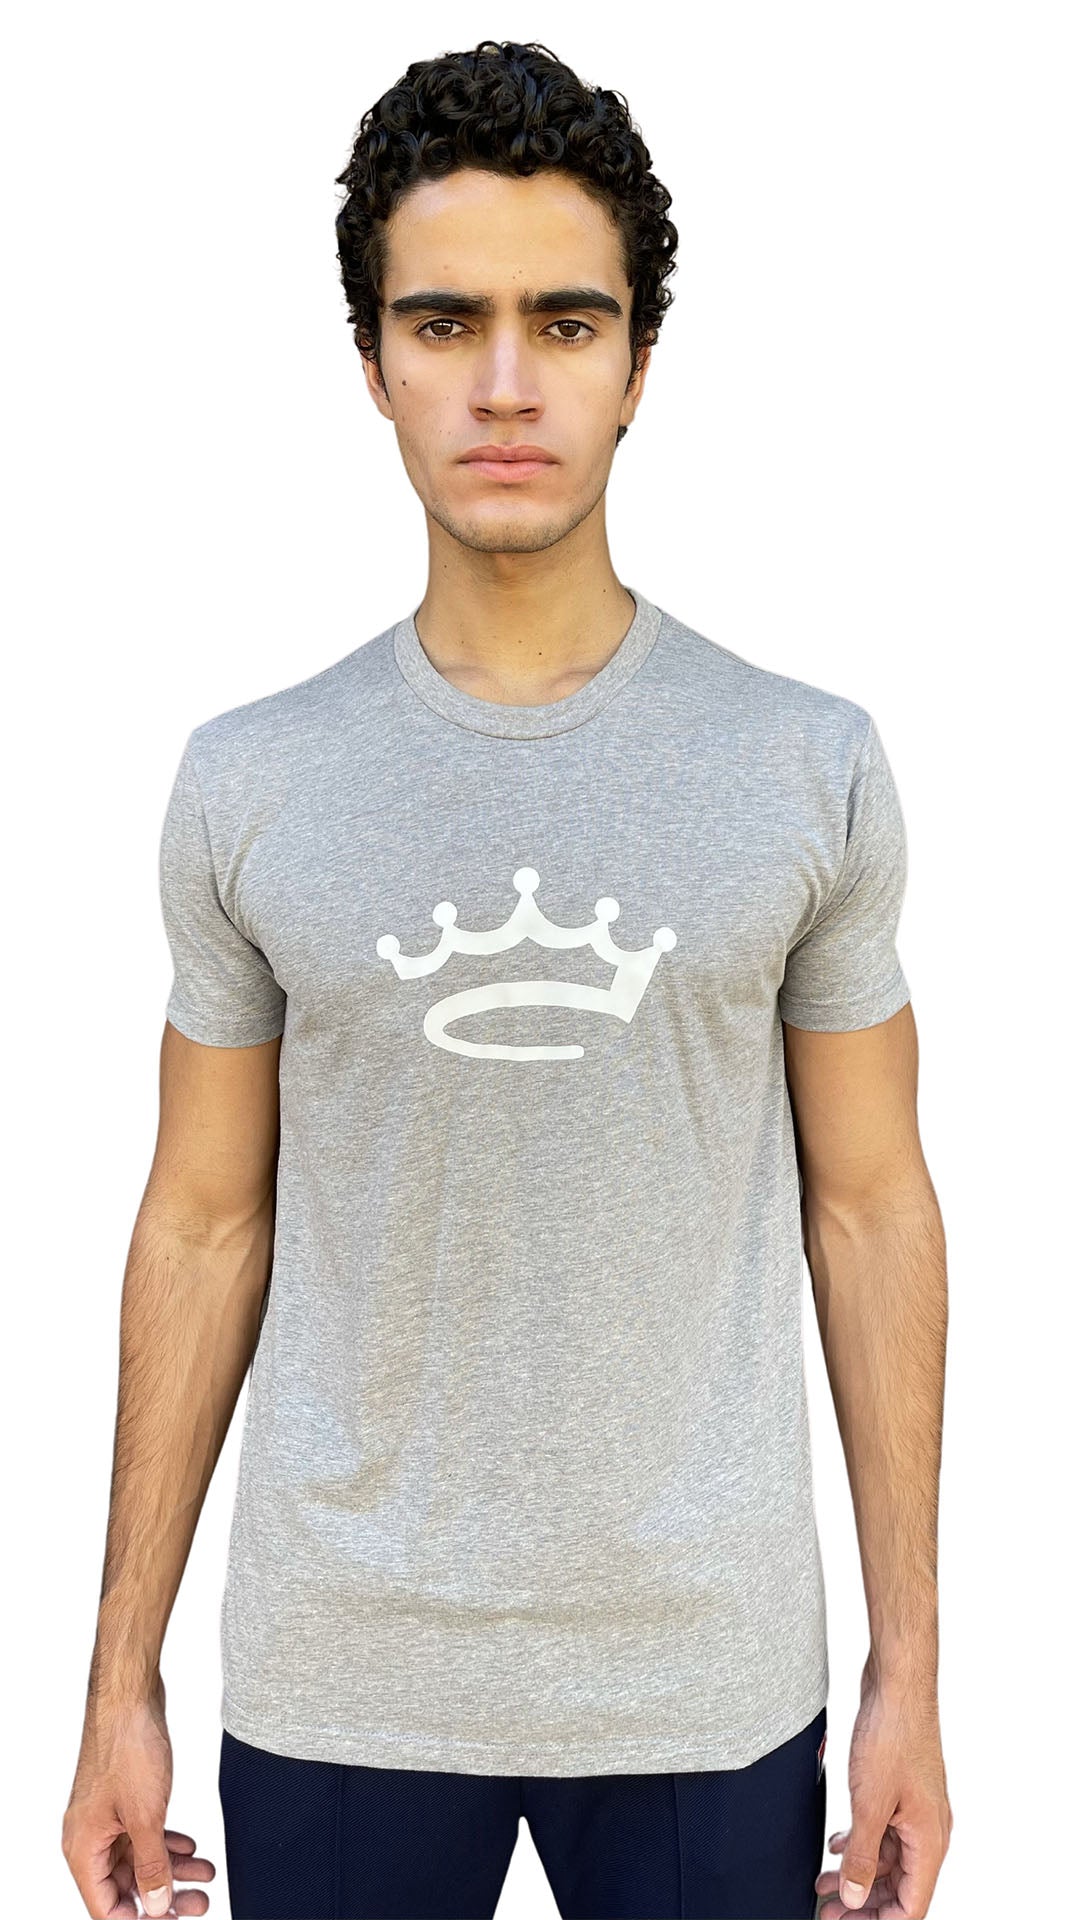 Men's Heather Grey / White - shirt - Crowned Brand